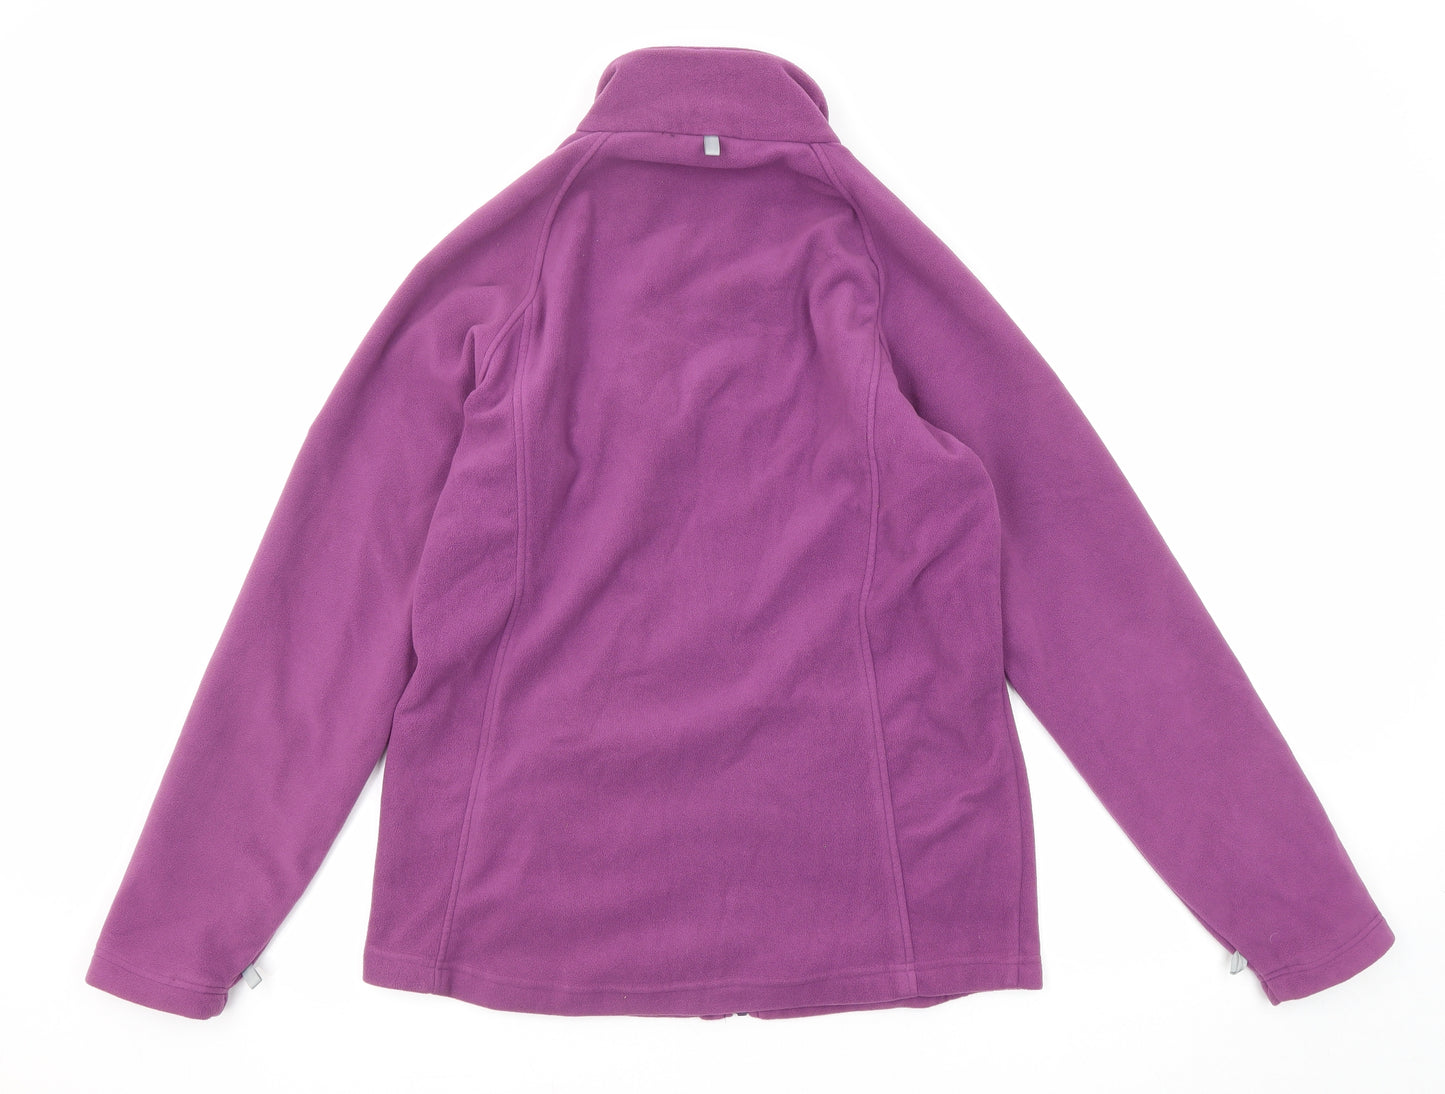 Craghoppers Womens Purple Jacket Size 14 Zip